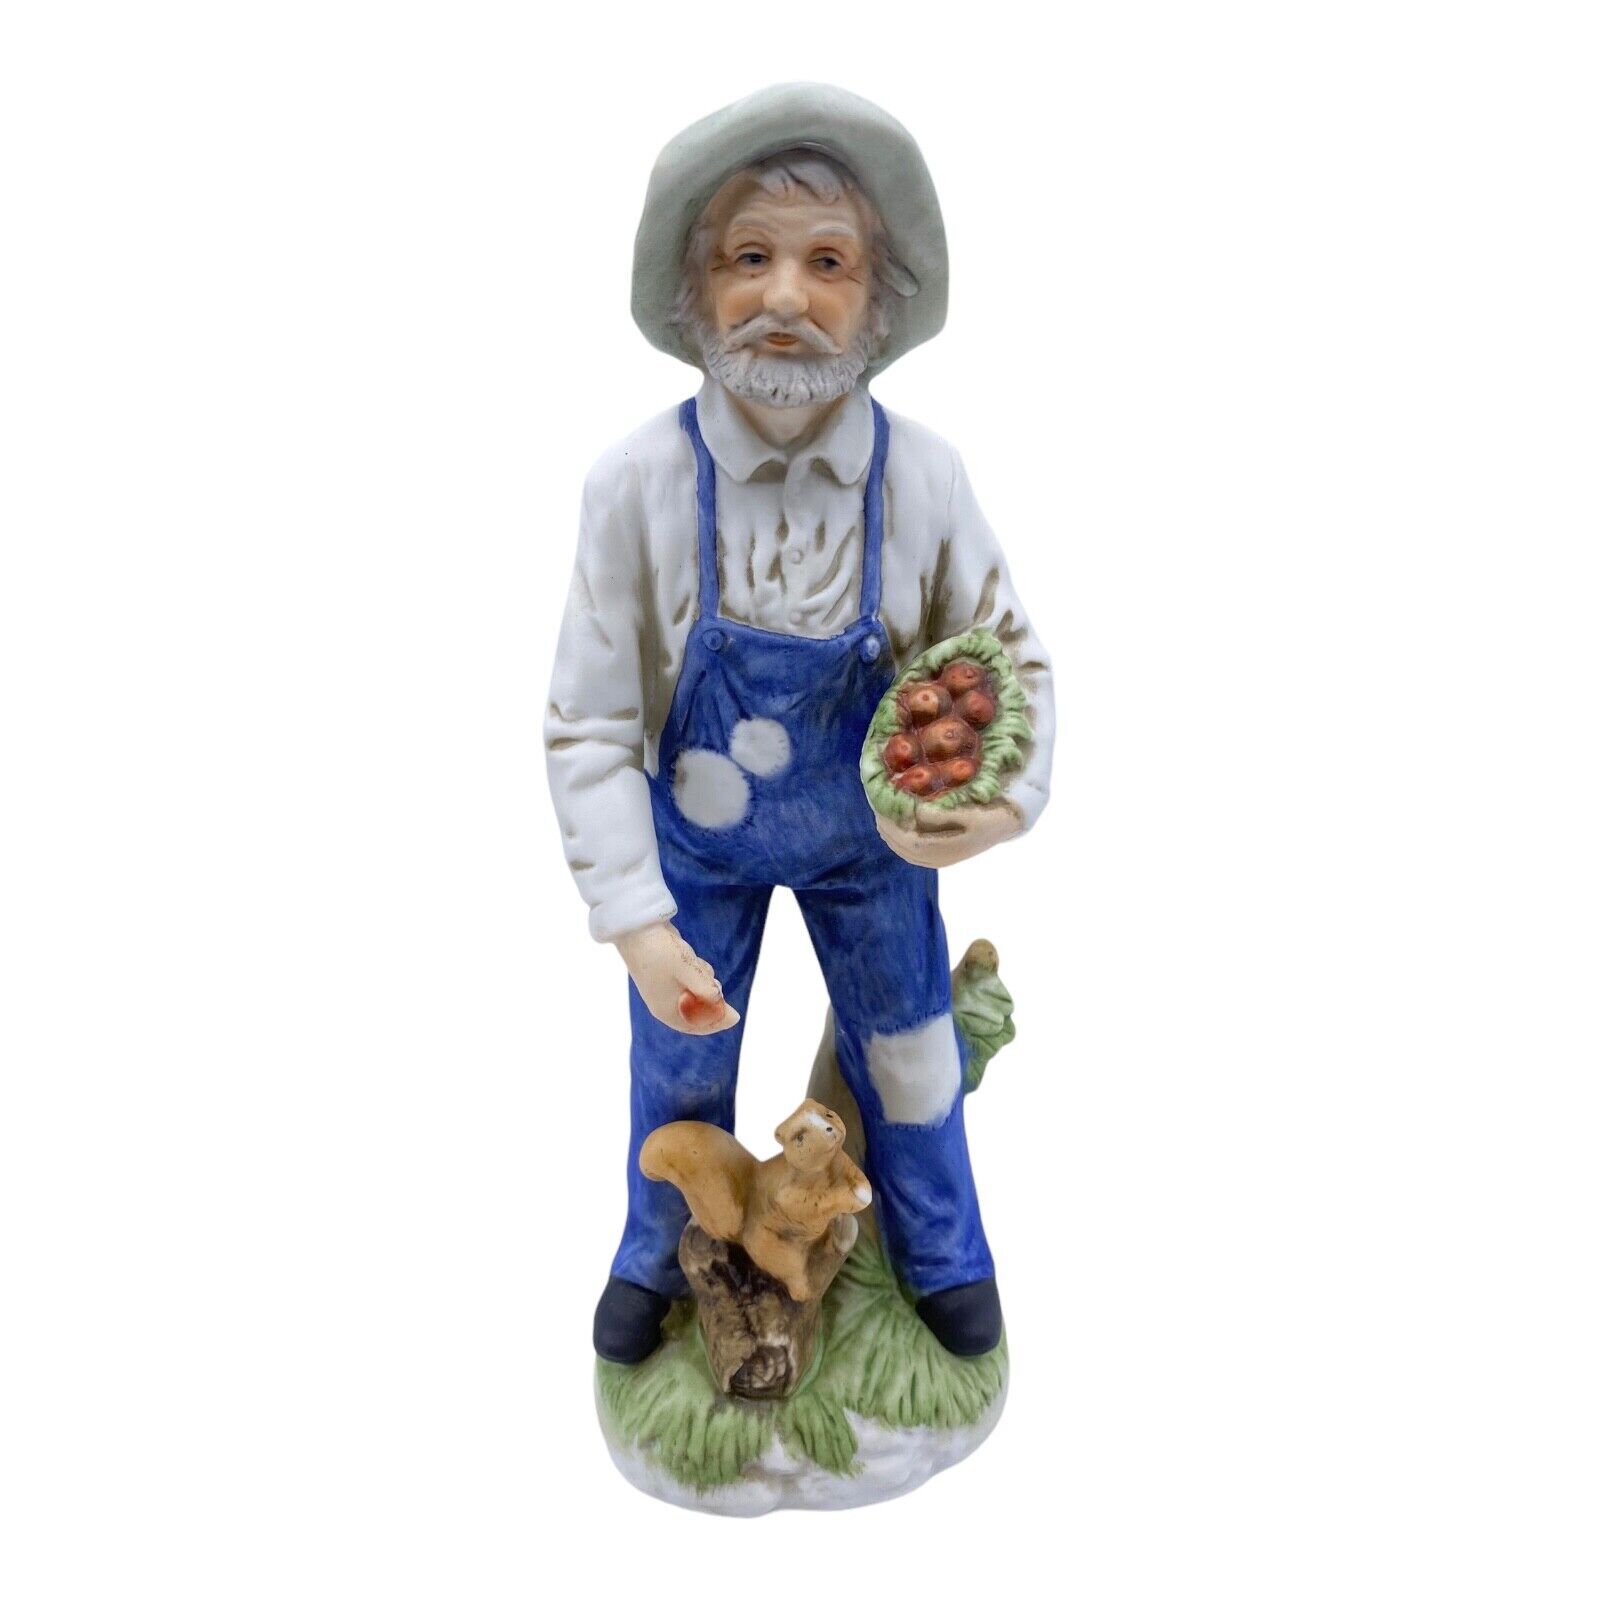 Vintage Homco Figurine #1409 Old Man with Apples Feeding Squirrel Farmer